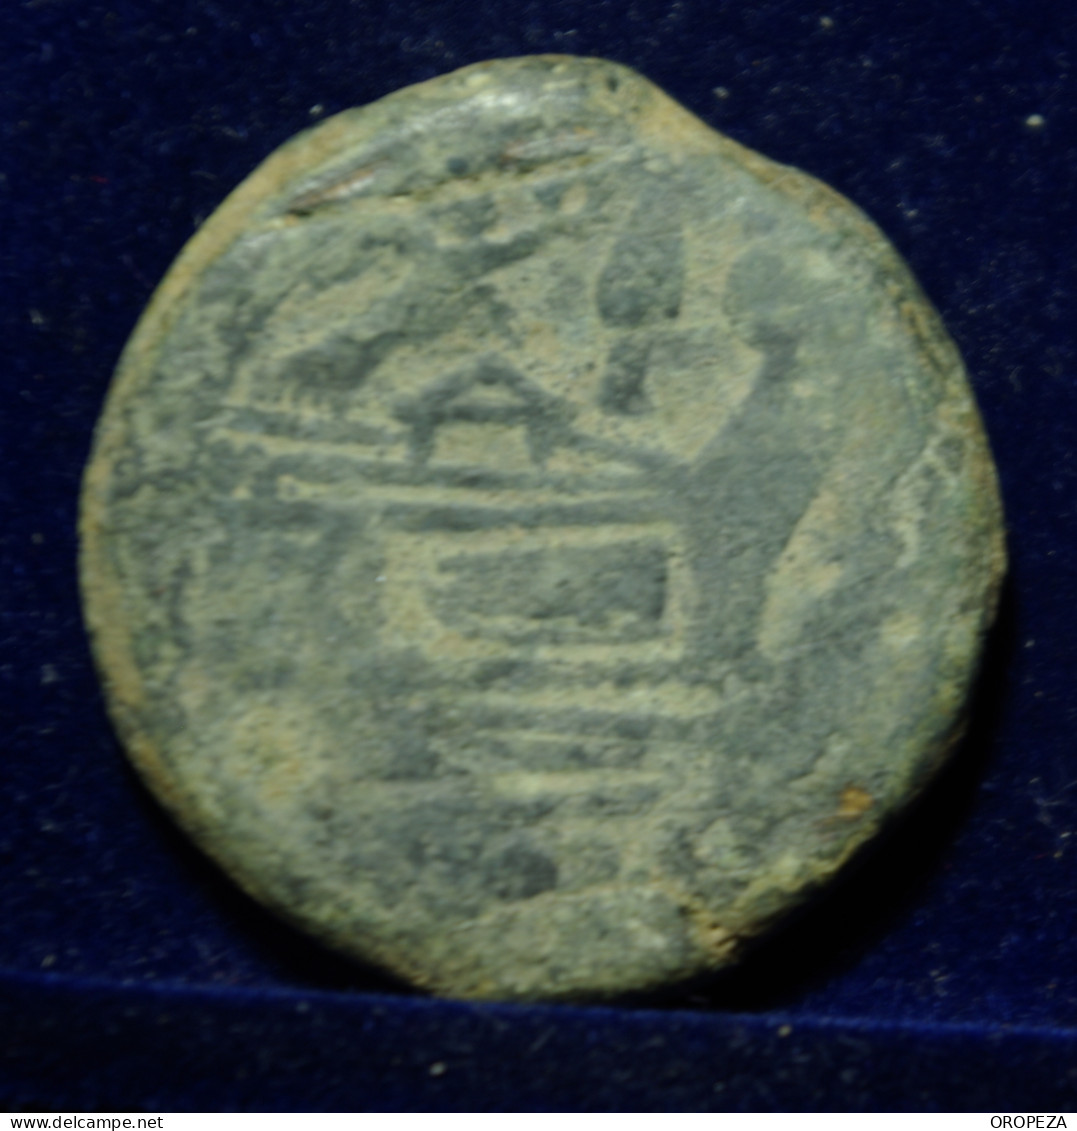 95  -  BONITO  AS  DE  JANO - SERIE SIMBOLOS - VICTORIA Y PUNTA DE LANZA - MBC - Republic (280 BC To 27 BC)